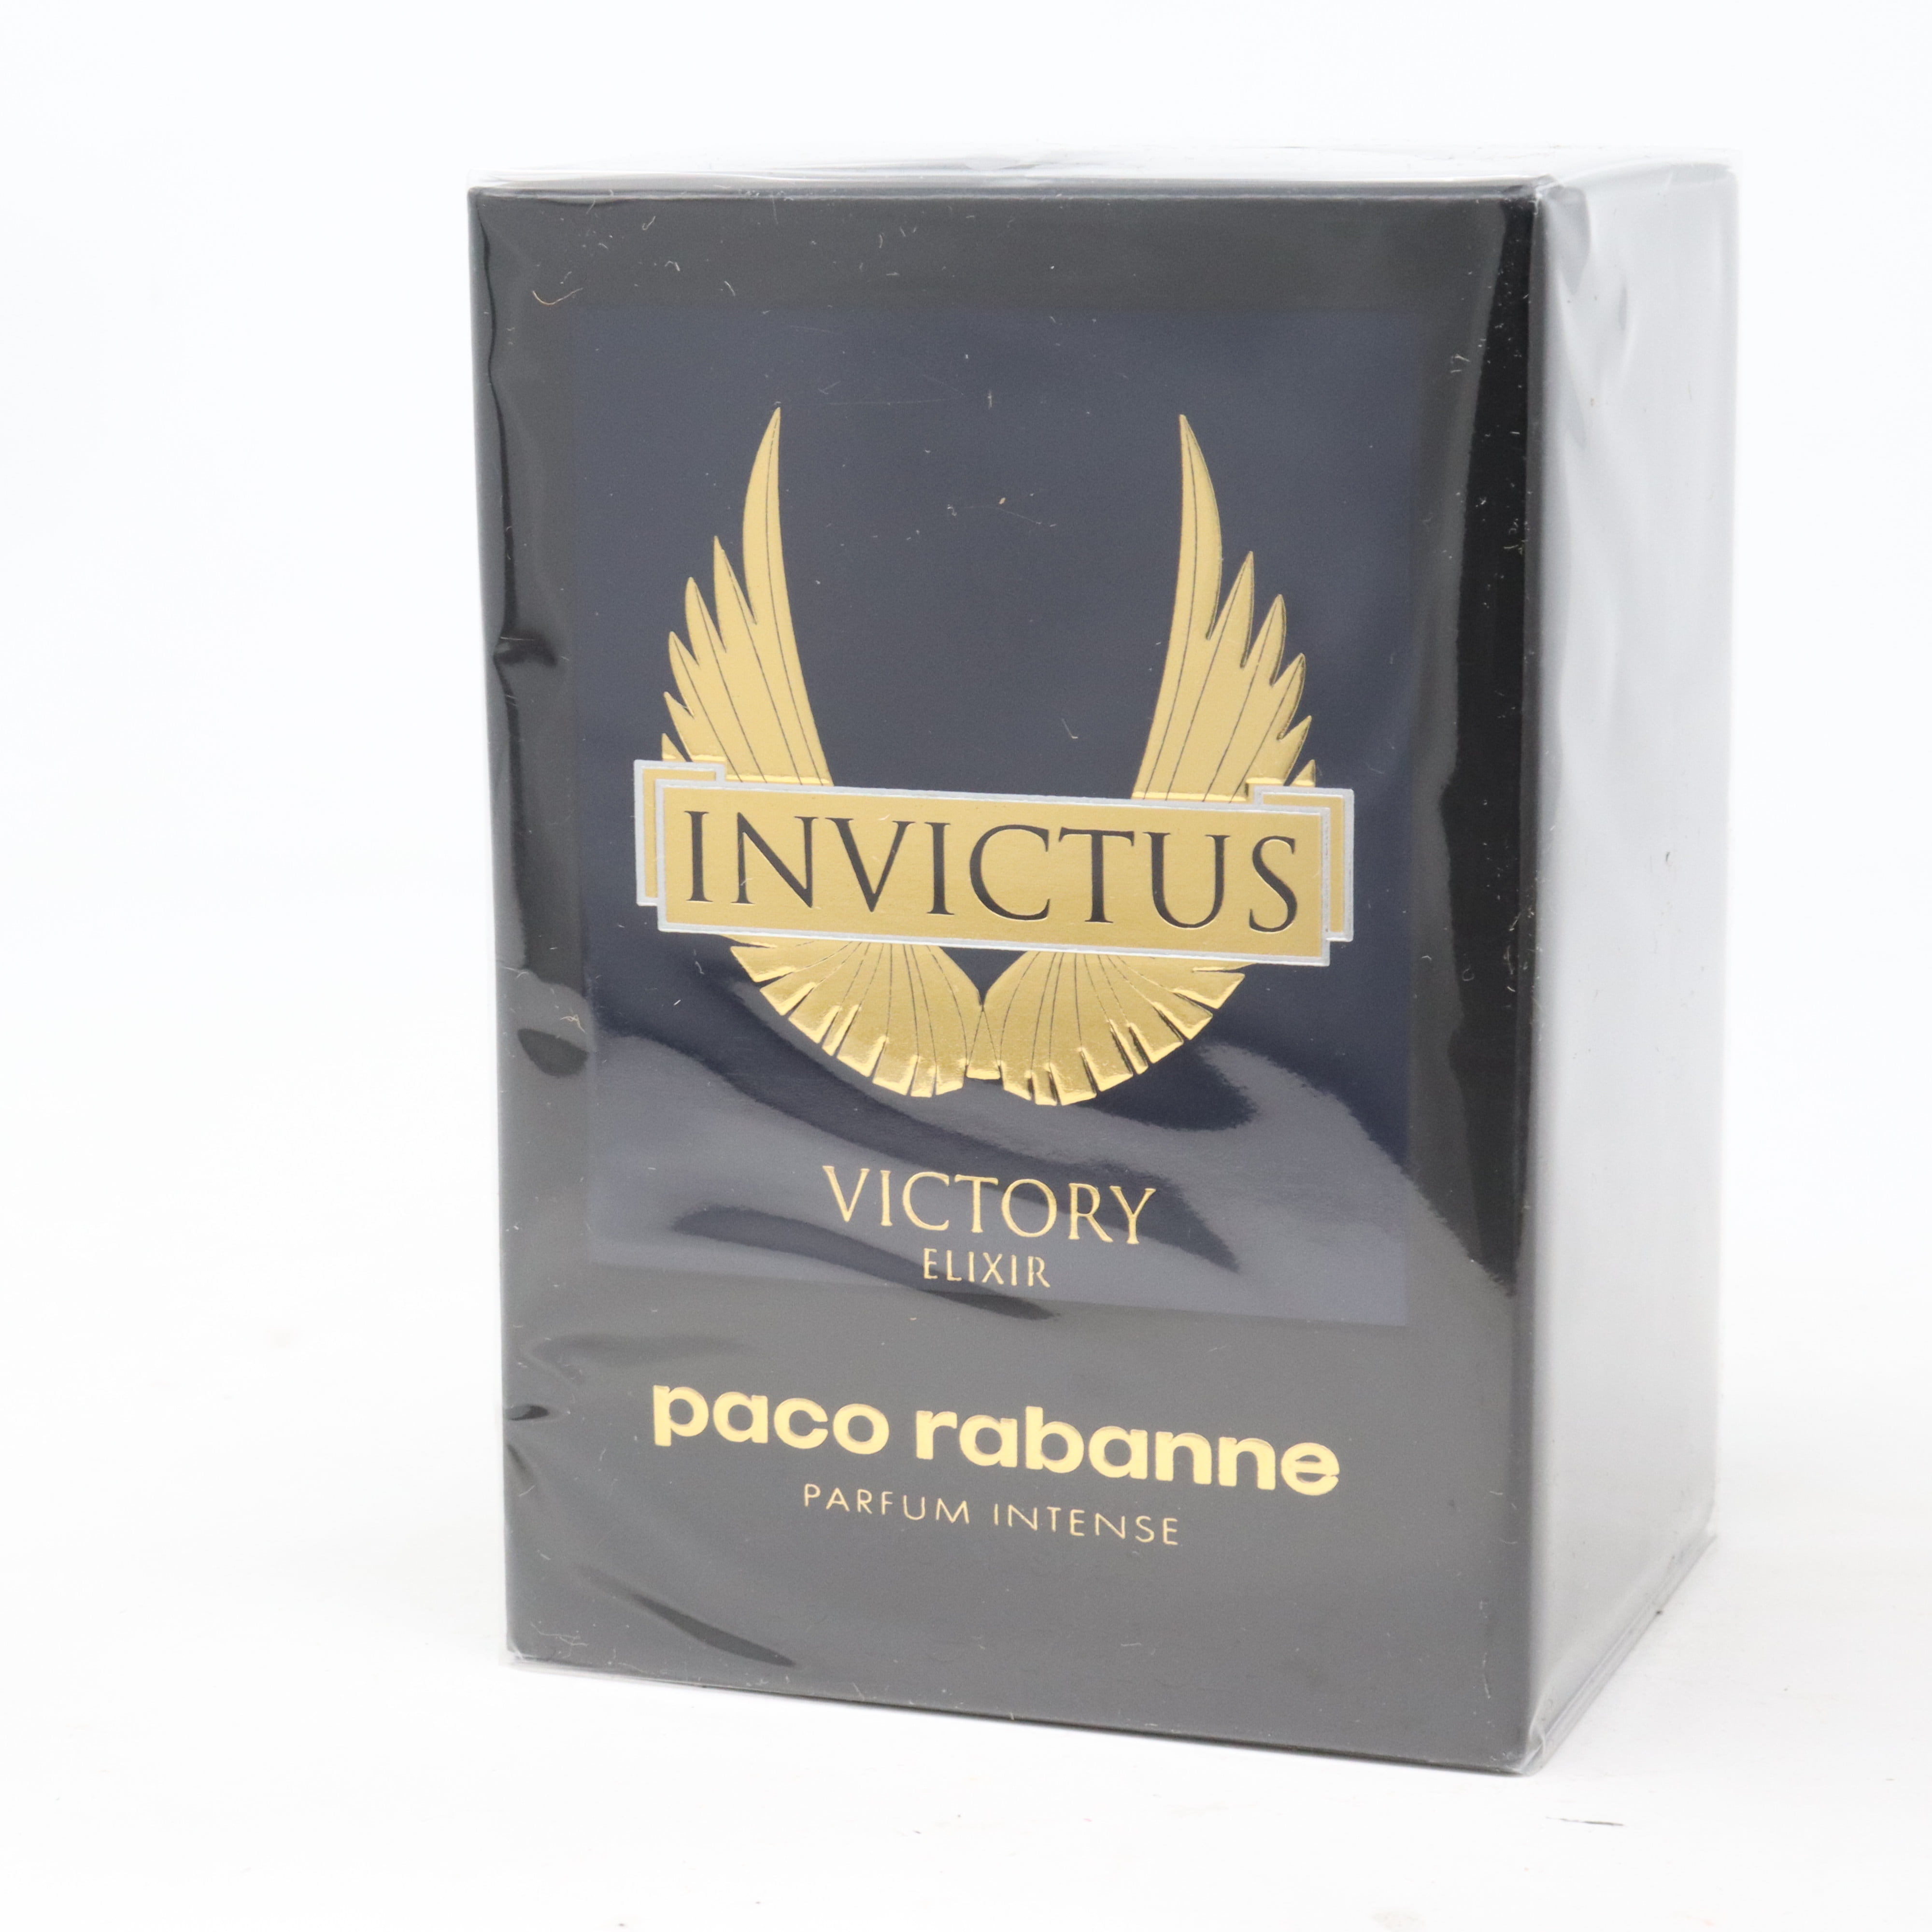 Invictus Victory Elixir by Paco Rabanne Parfum Intense 1.7oz Spray New ...